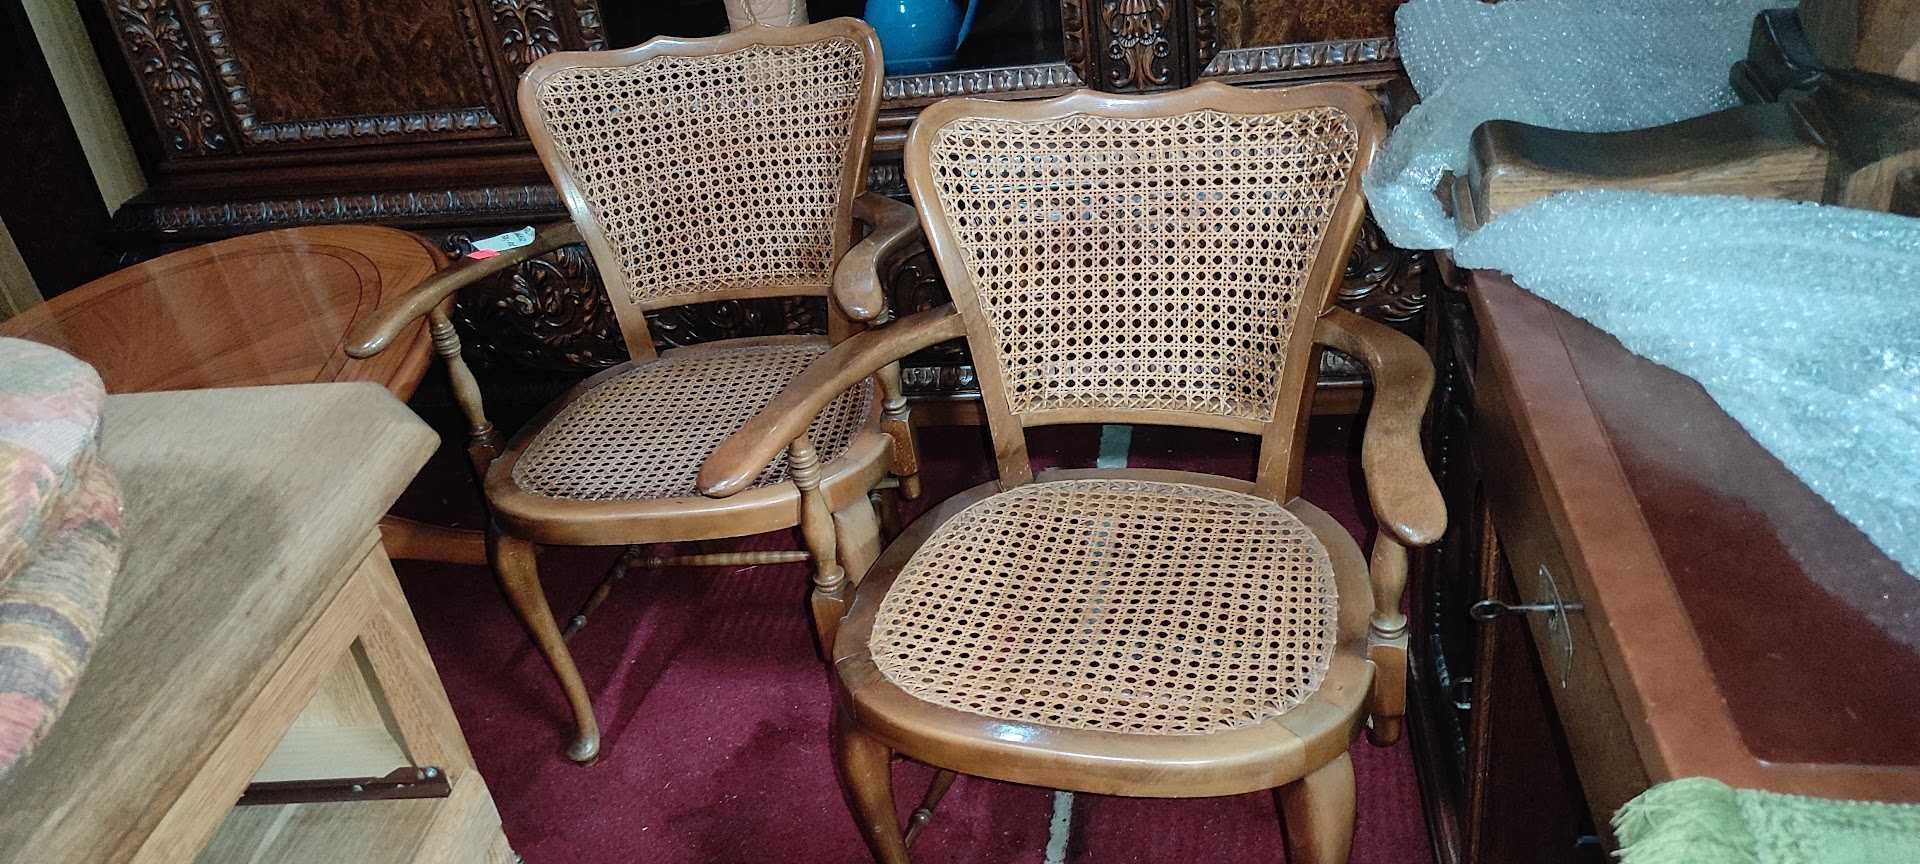 Krzesła fotele w stylu angielskim chippendale 2 sztuki komplet rattan